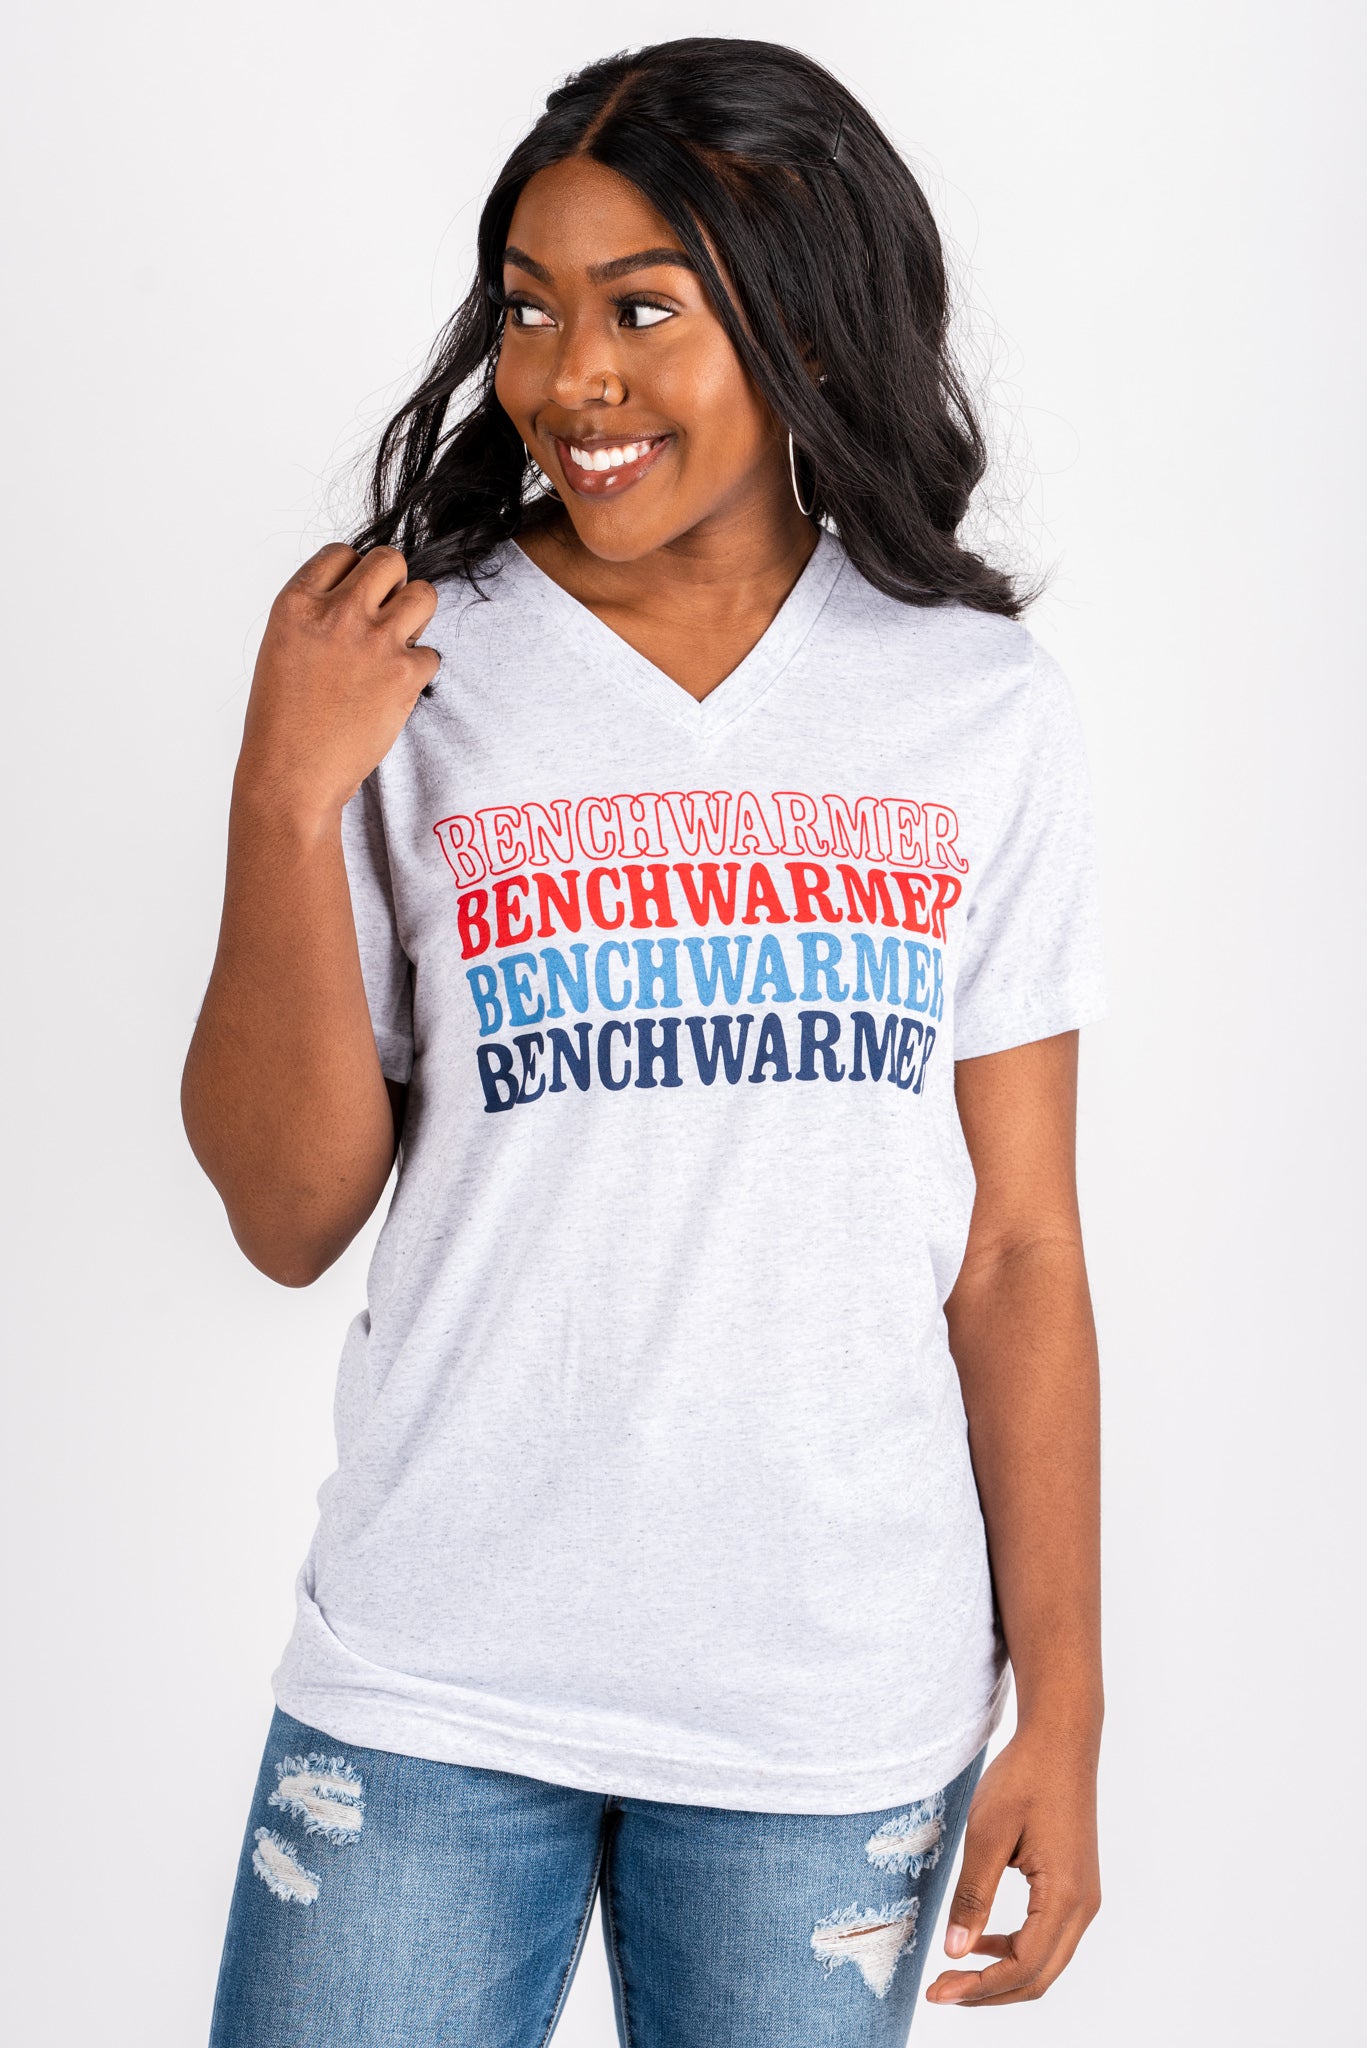 Benchwarmer unisex short sleeve v-neck t-shirt white fleck - Cute T-shirts - Funny T-Shirts at Lush Fashion Lounge Boutique in Oklahoma City